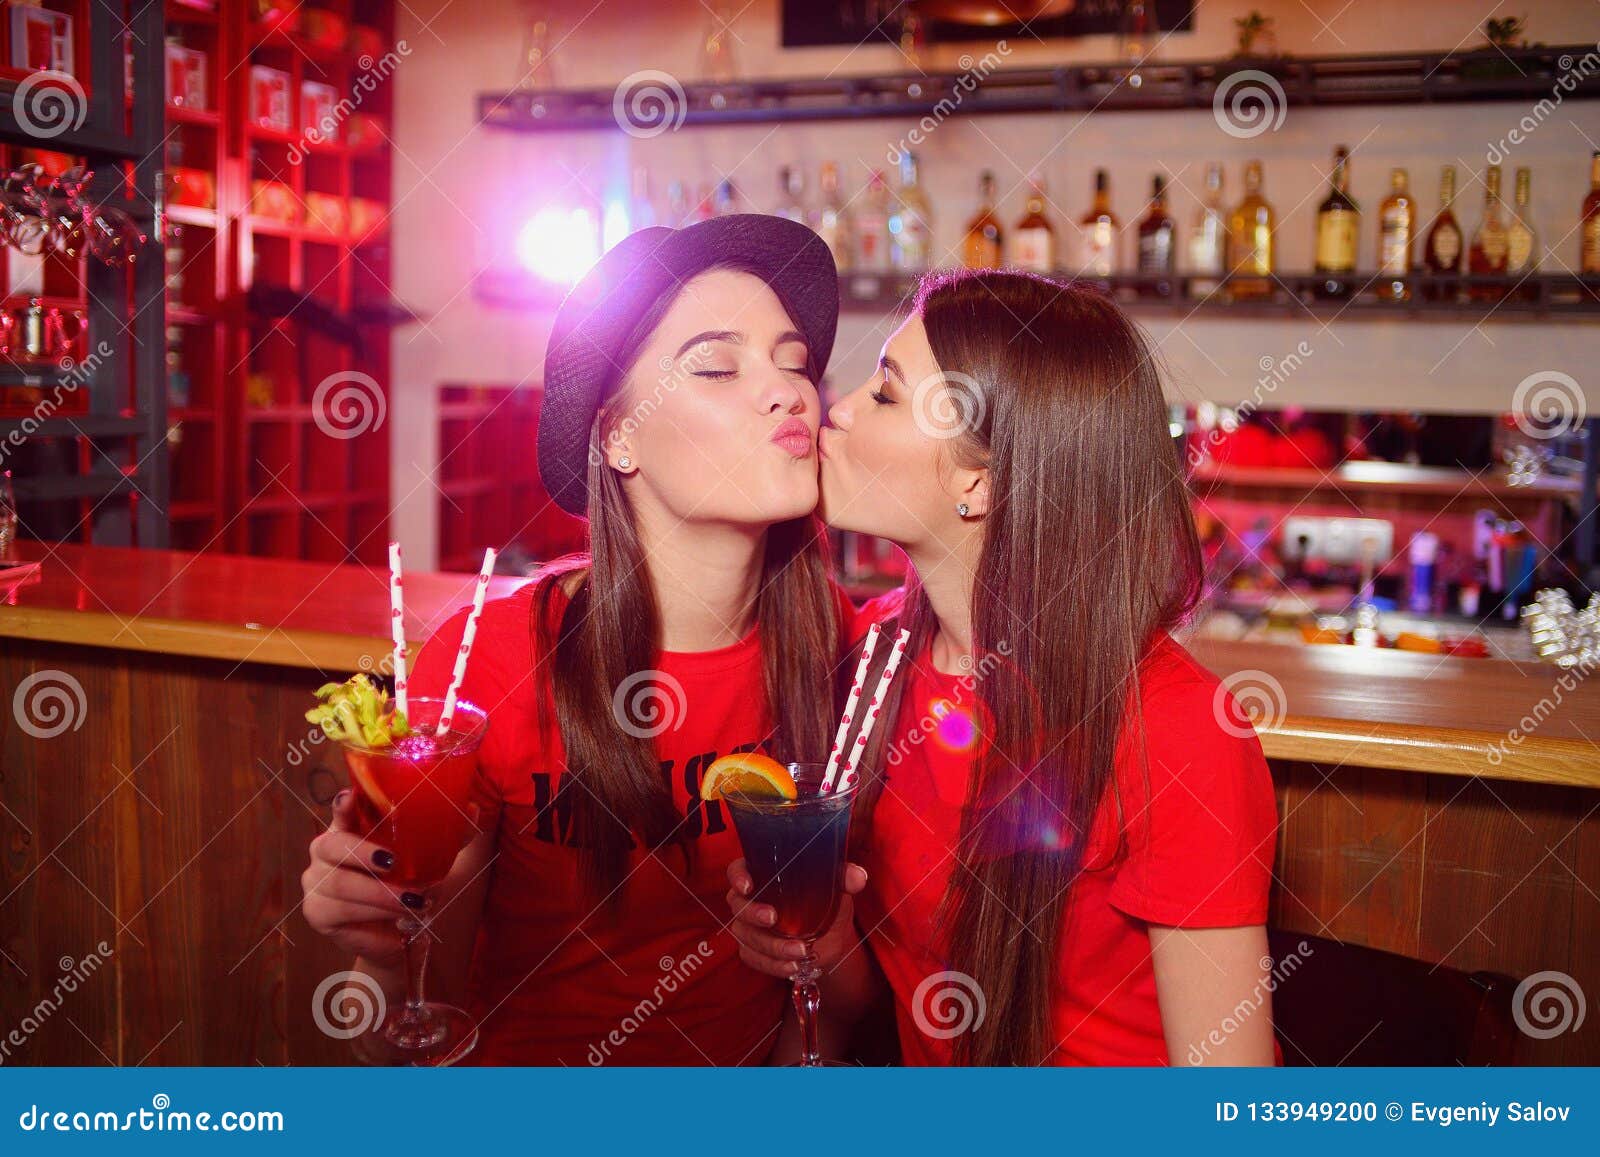 kiss lesbian party